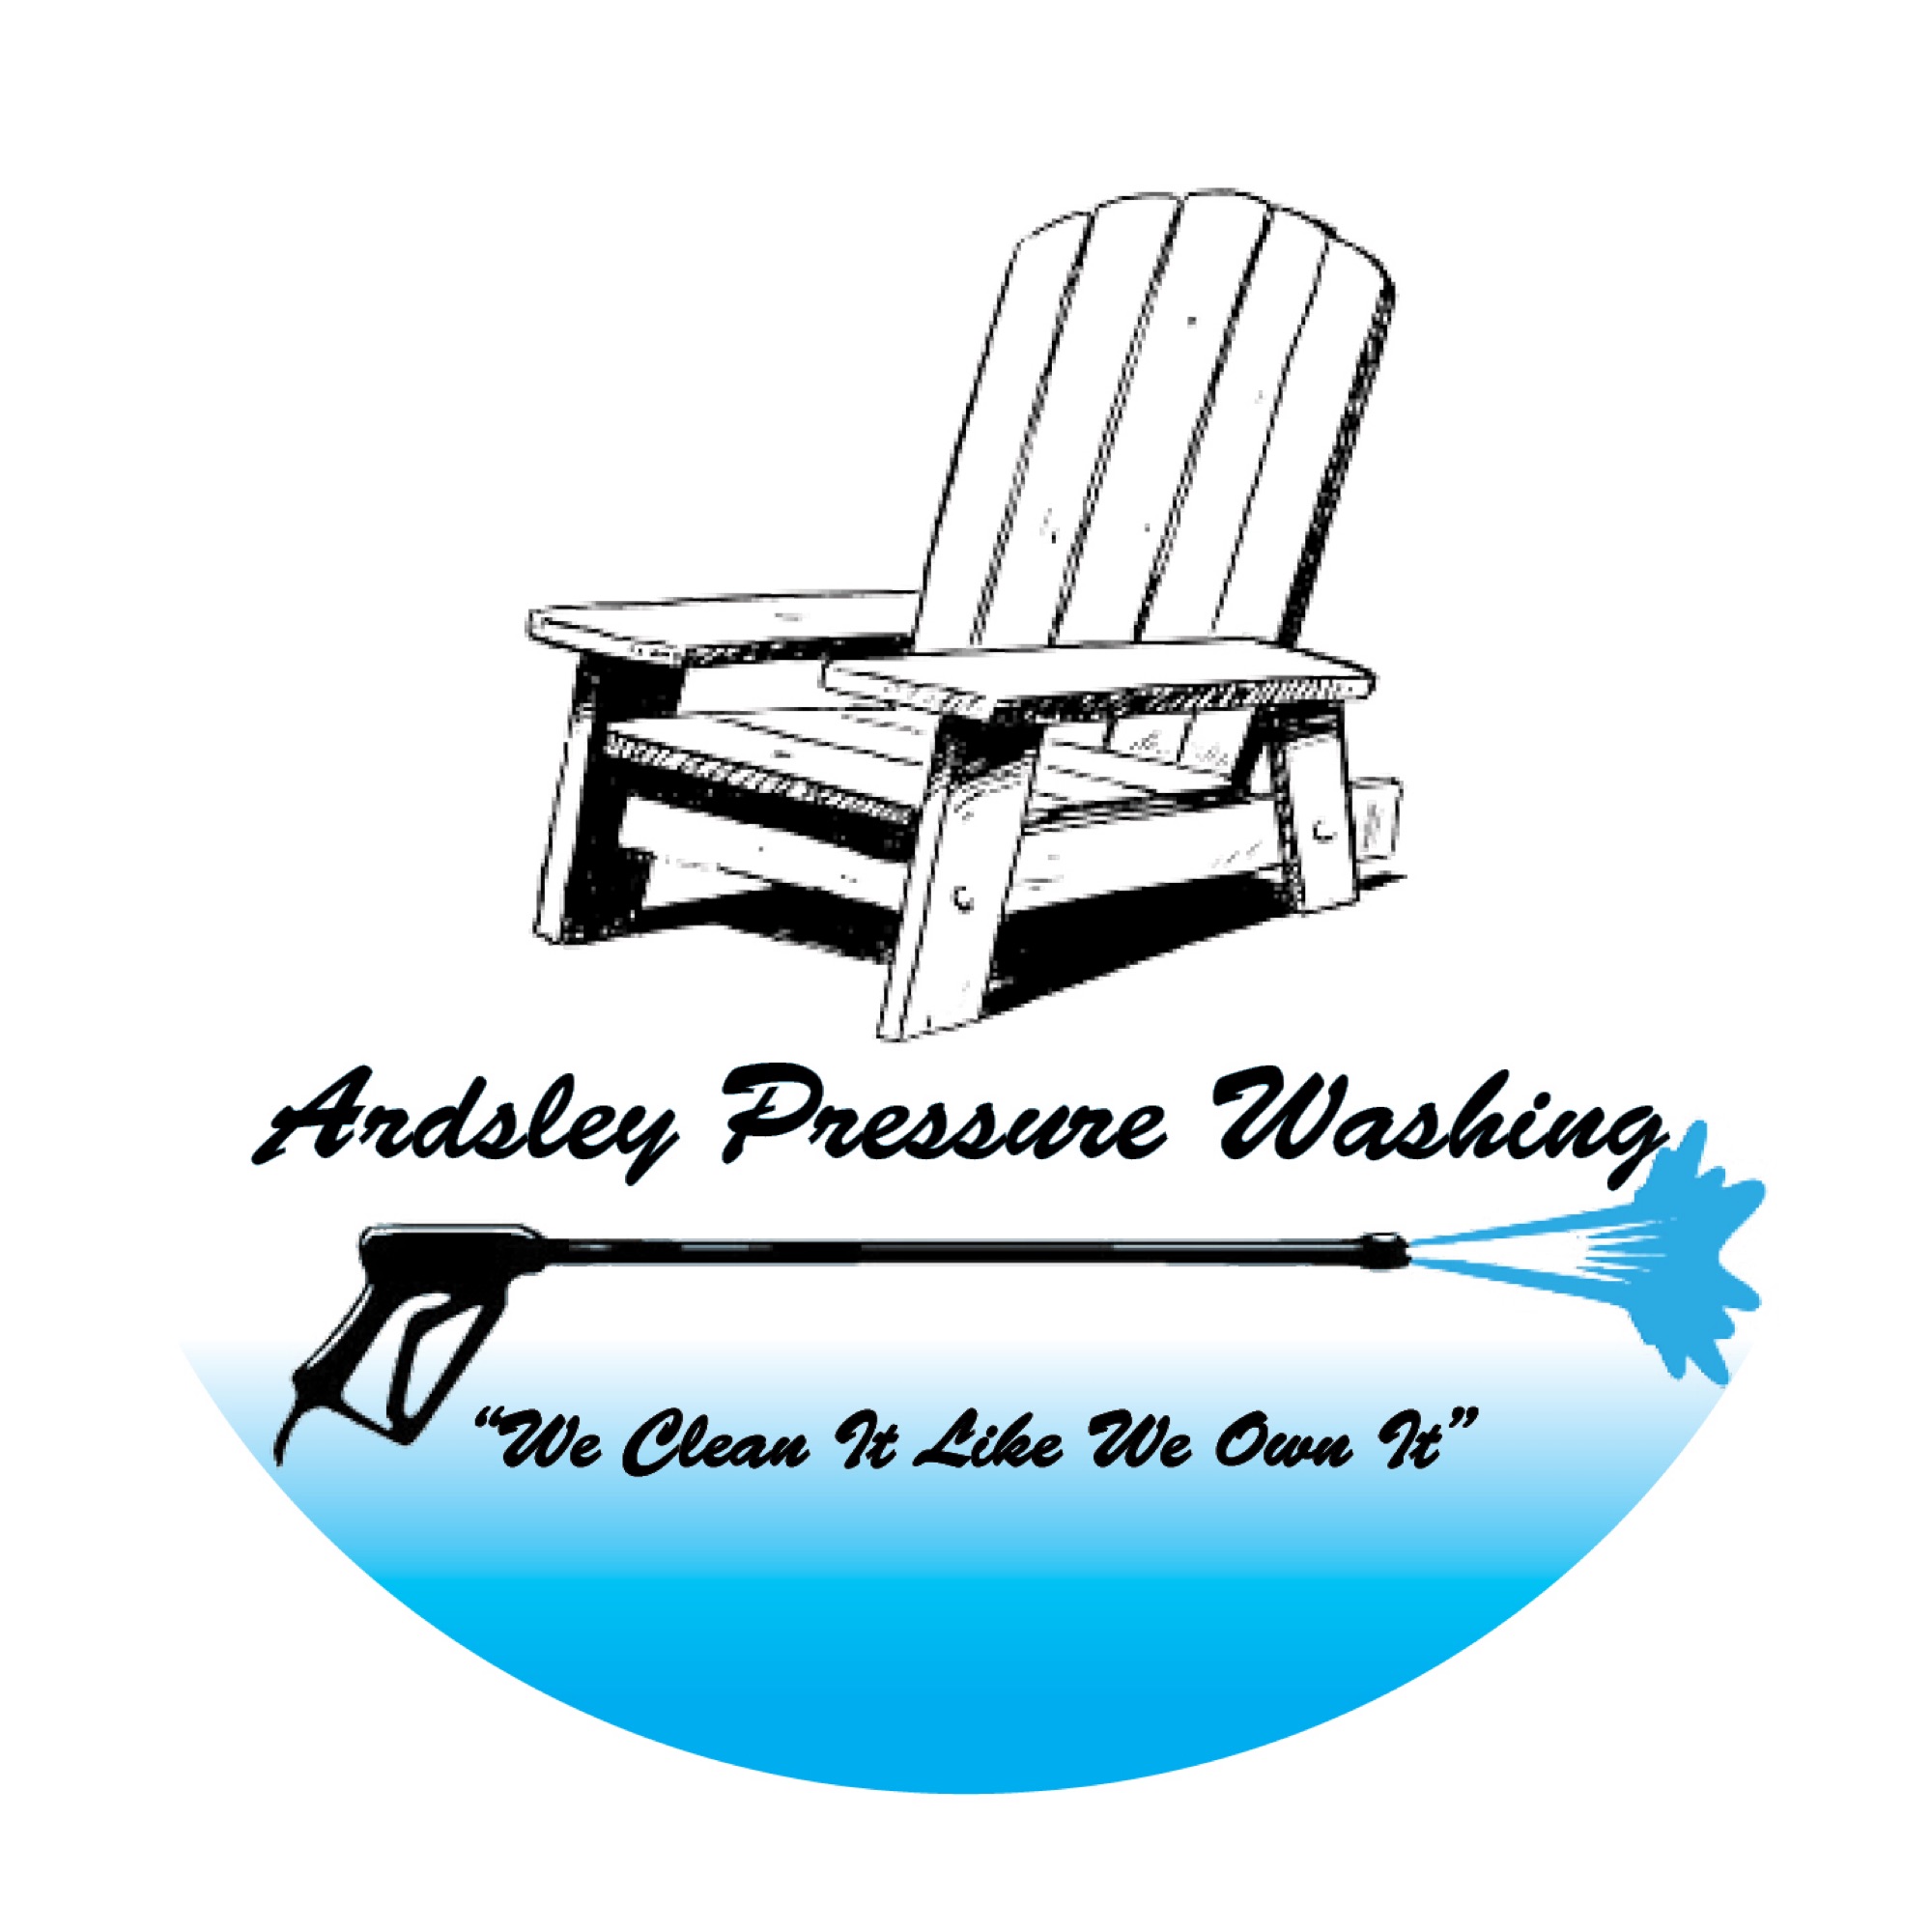 Ardsley Pressure Washing Logo